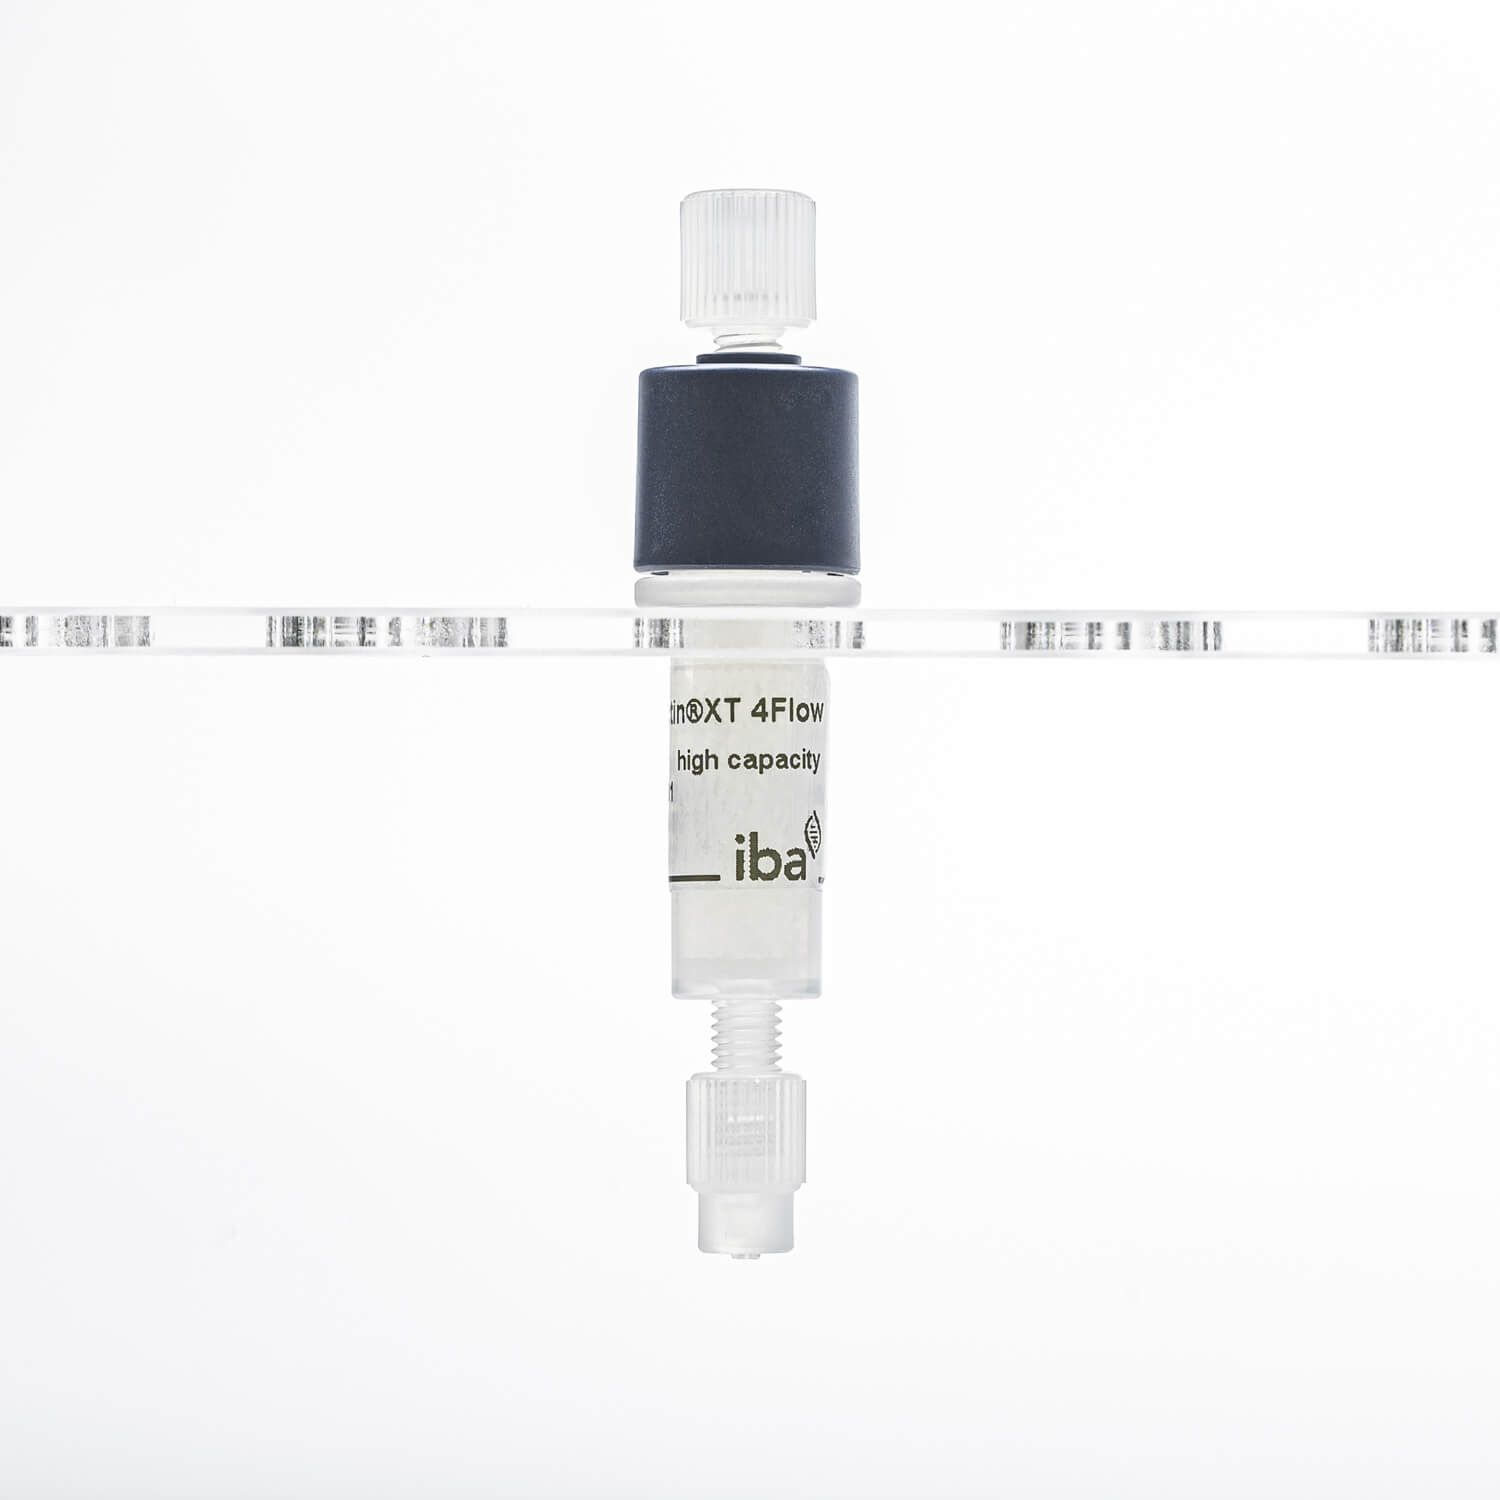 Strep-Tactin®XT 4Flow® high capacity cartridge (with 10-32 connection for HPLC and Äkta)